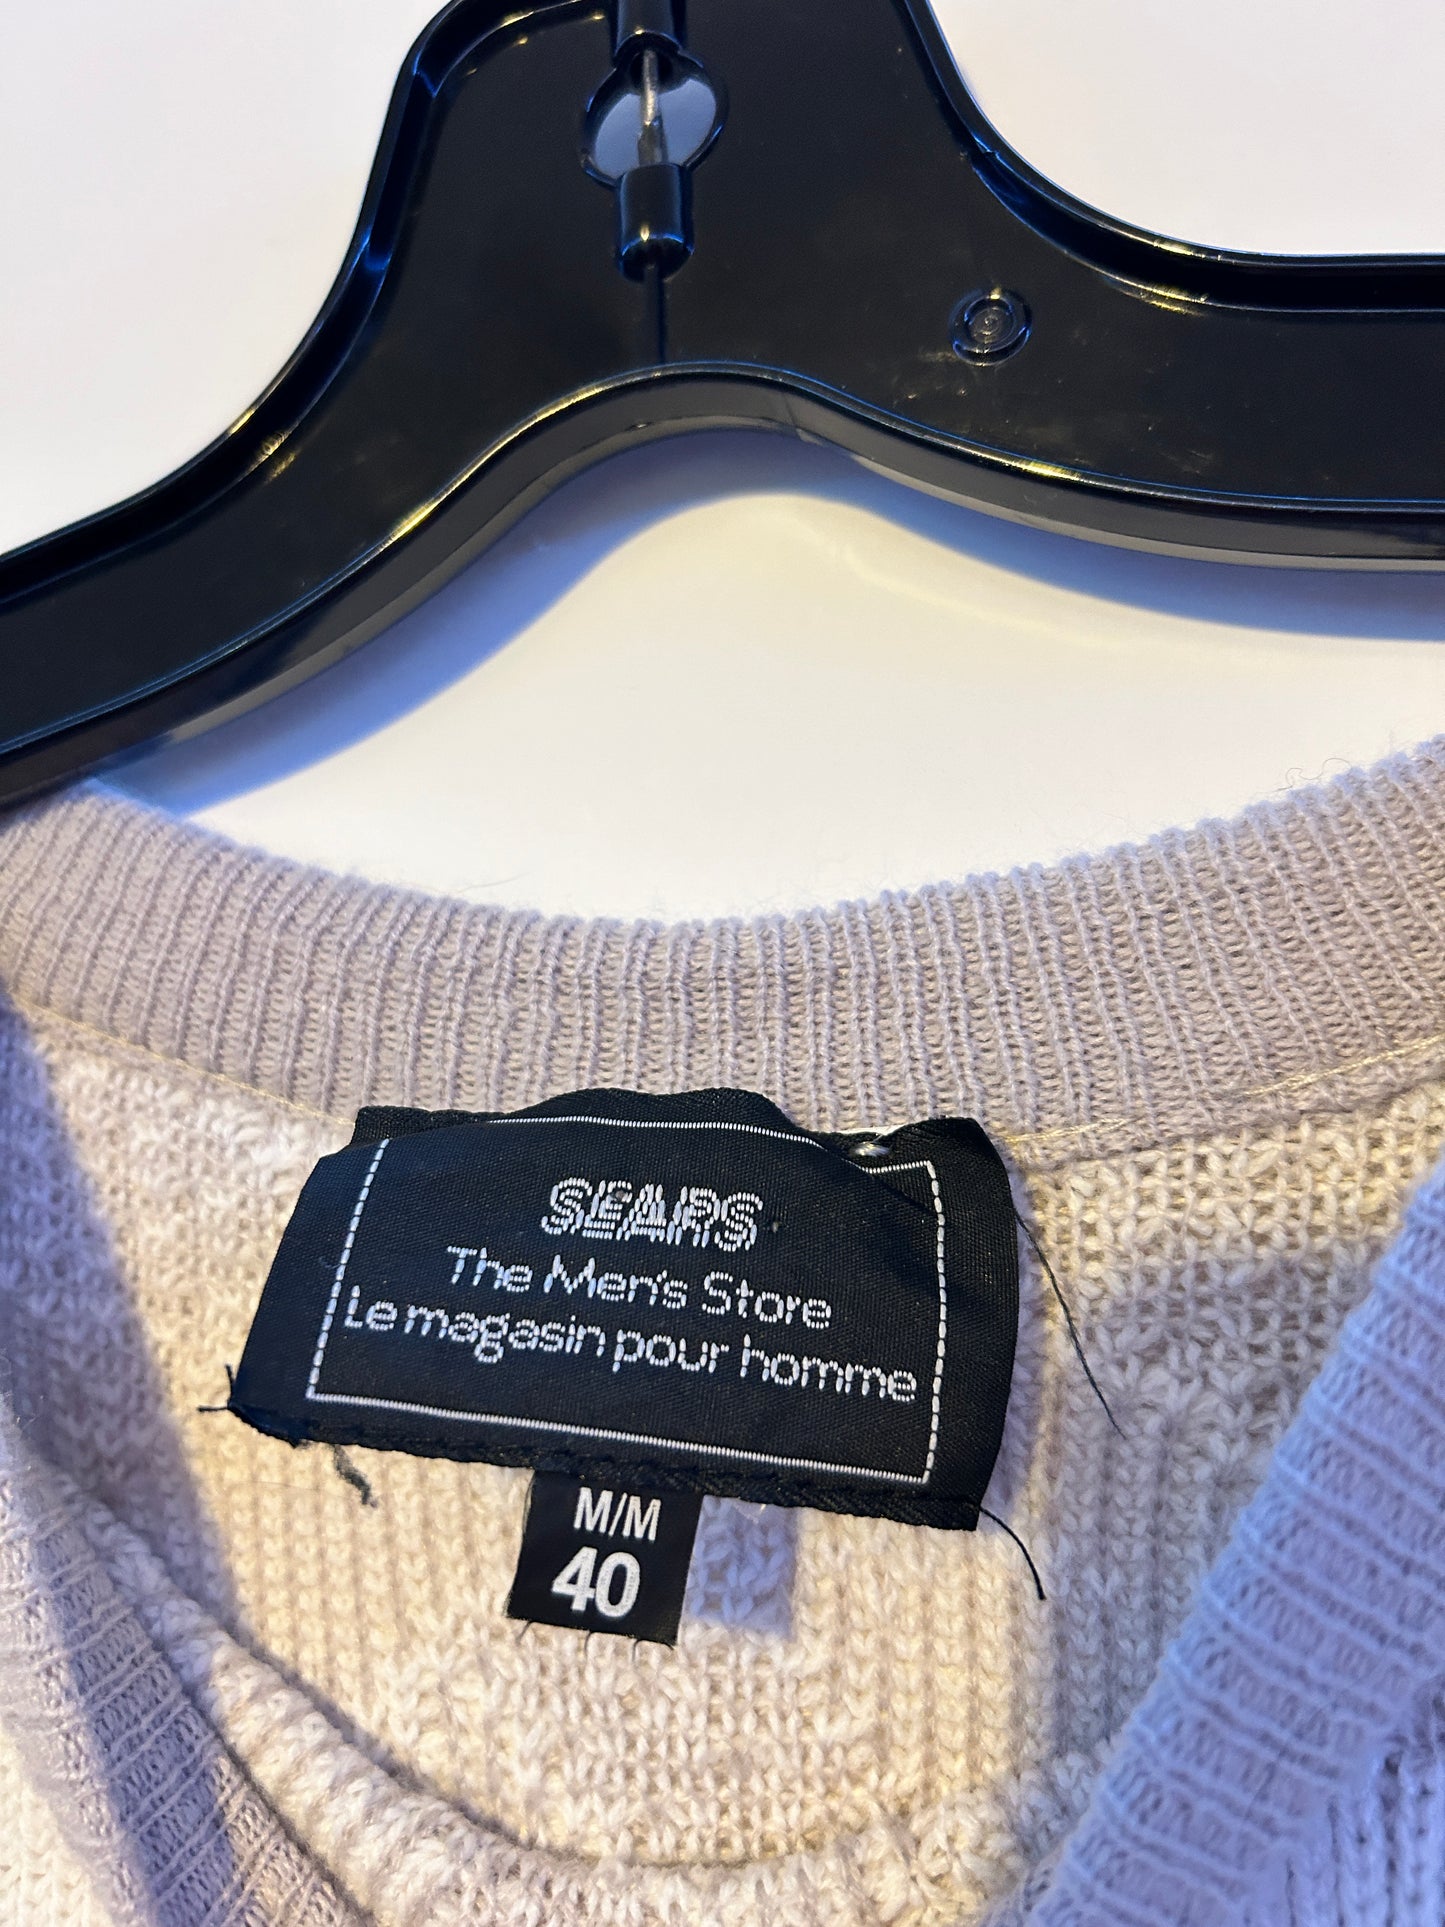 Vintage Sears Patterned Knit Sweater (M)